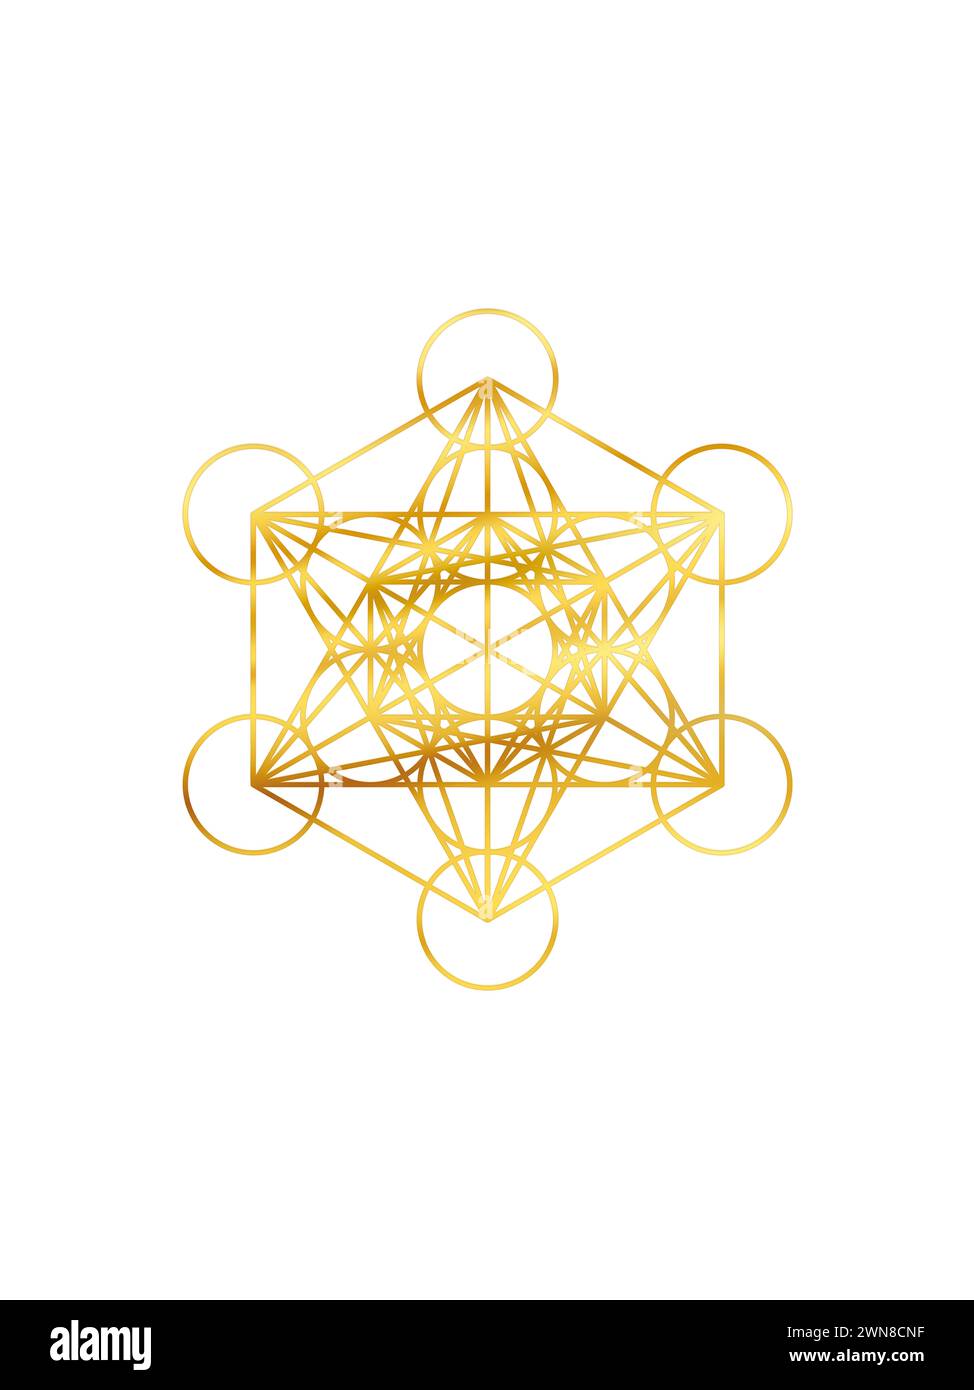 Metatron cube gold symbol isolated on white background. Sacred geometry metatron's cube golden symbol. Stock Photo